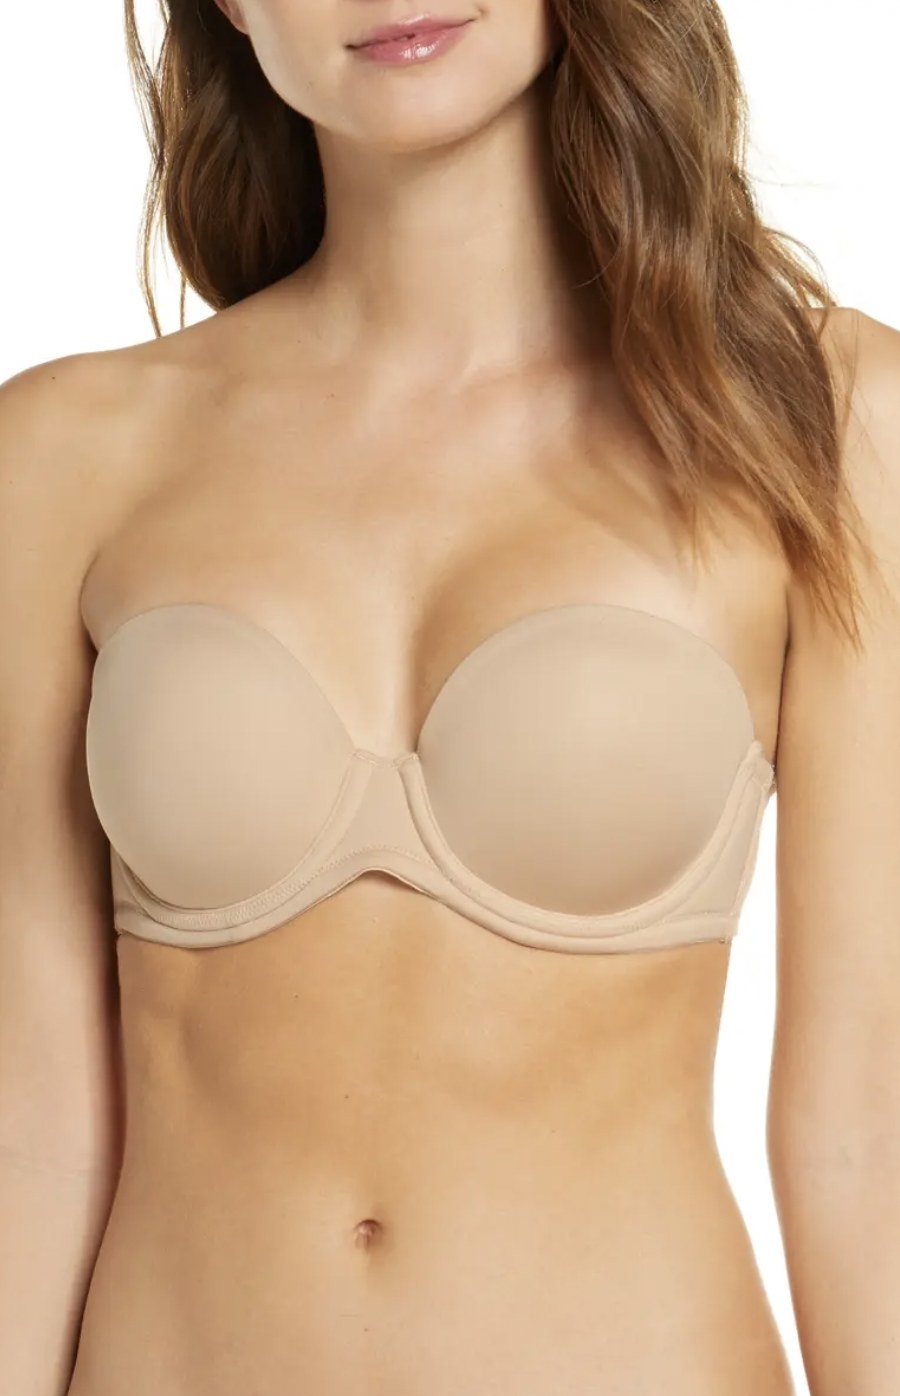 Model in the beige strapless bra